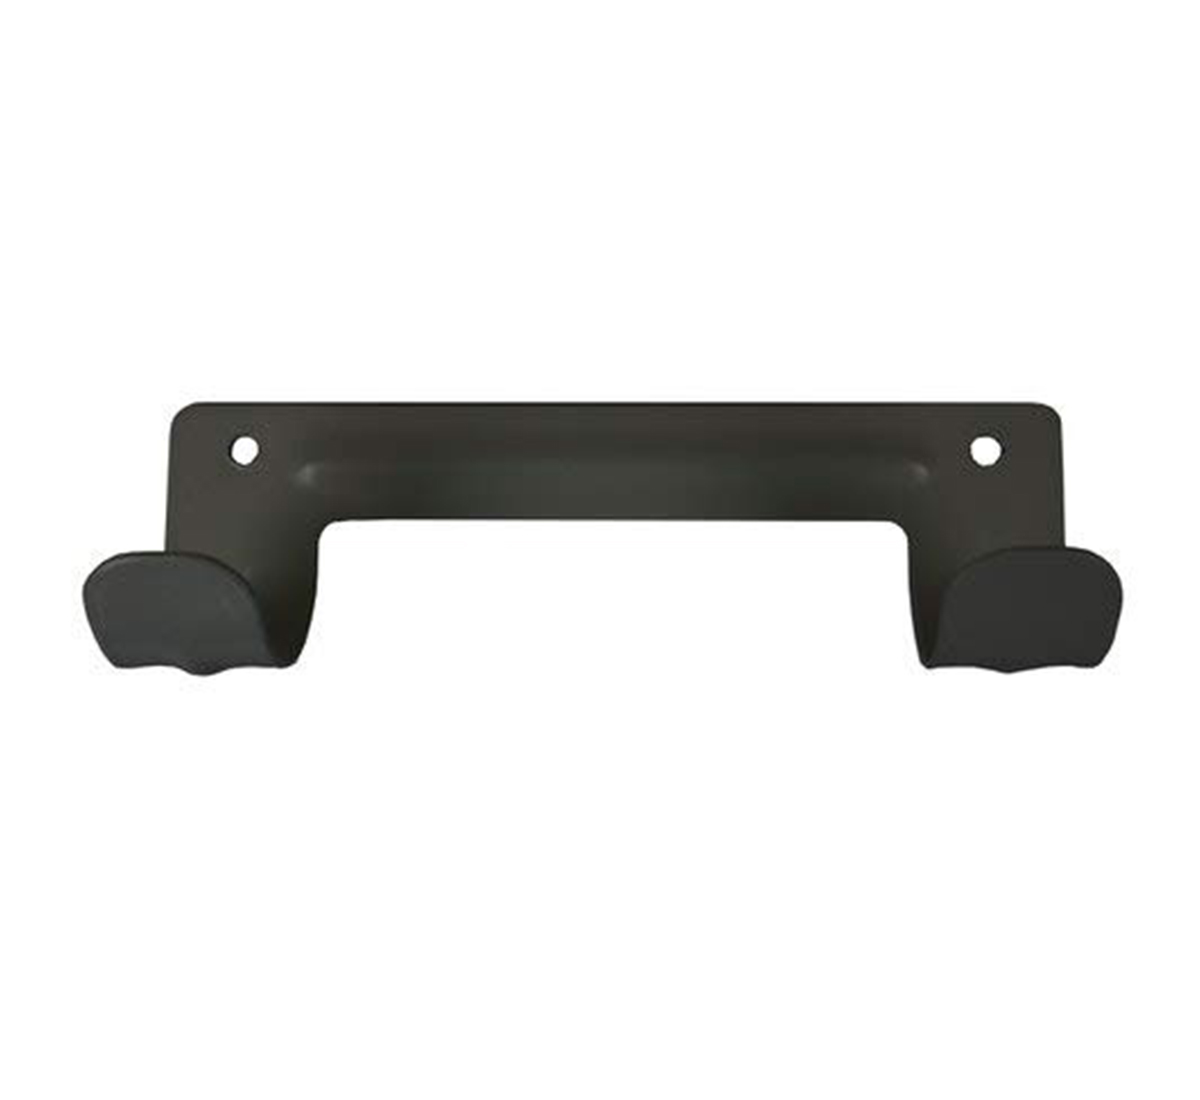 Black iron board holder stand